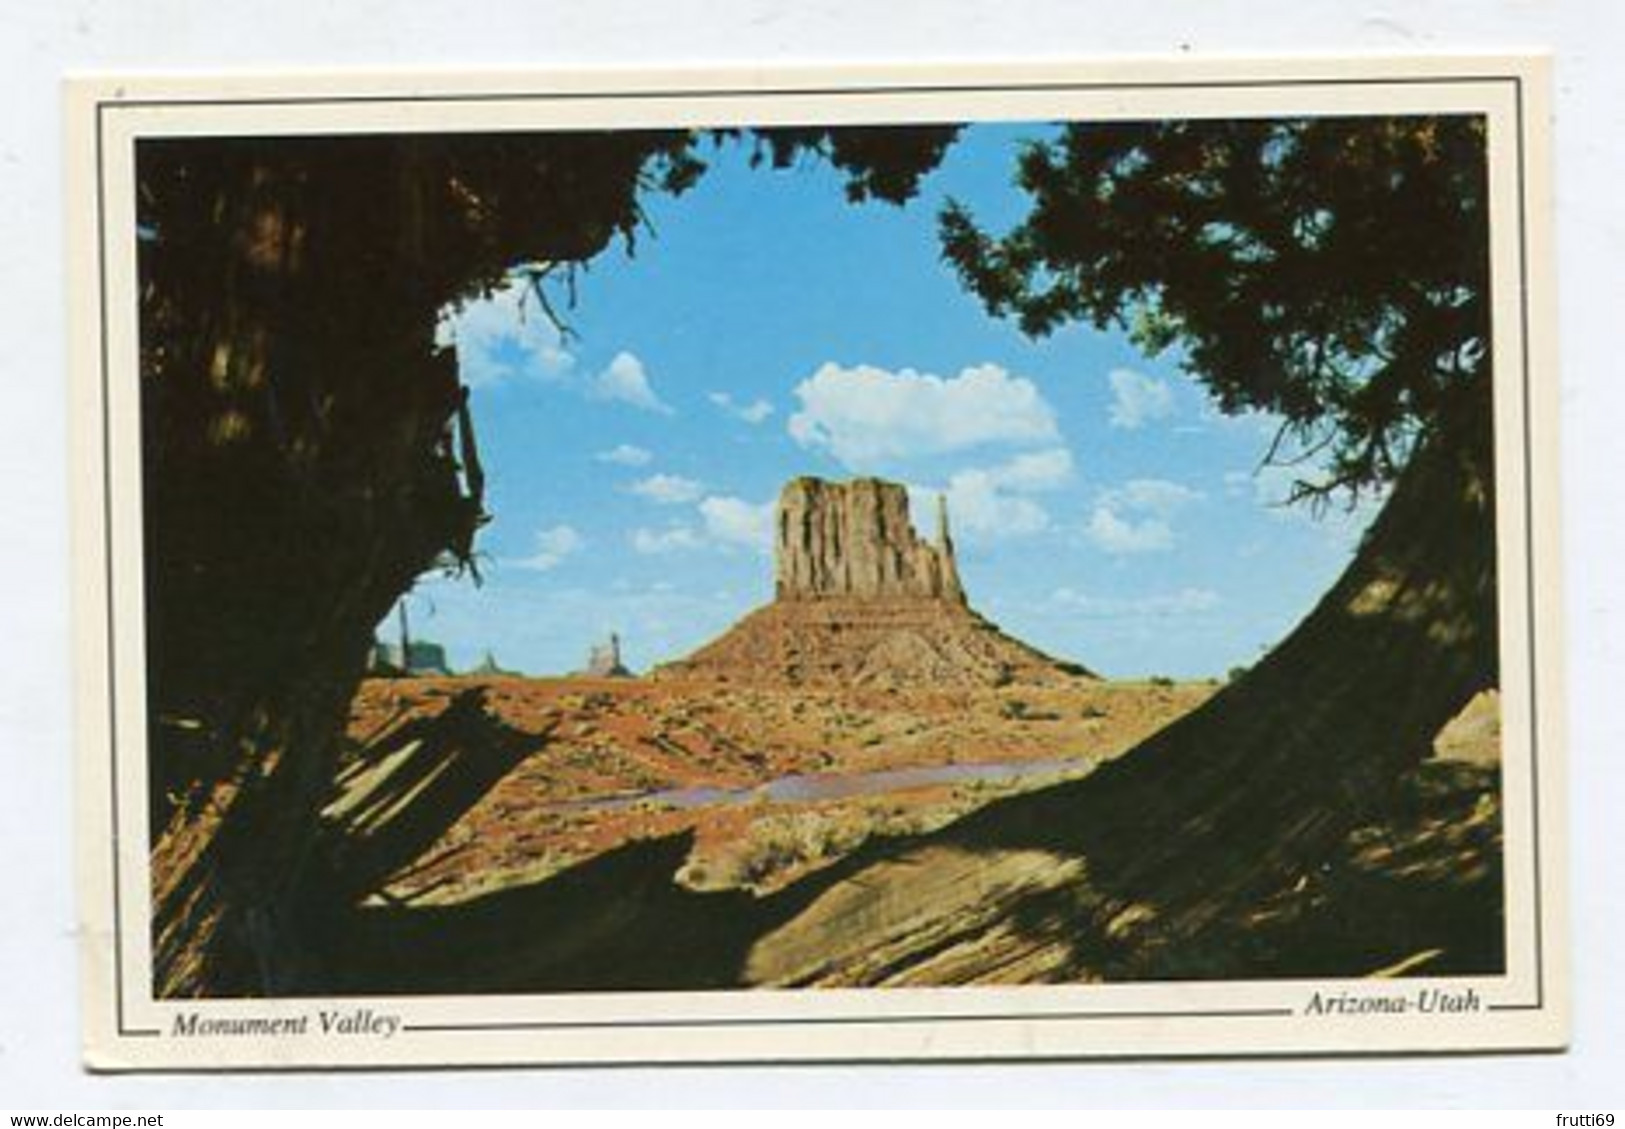 AK 016961 USA - Arizona / Utah - Monument Valley - Artist Point - Monument Valley